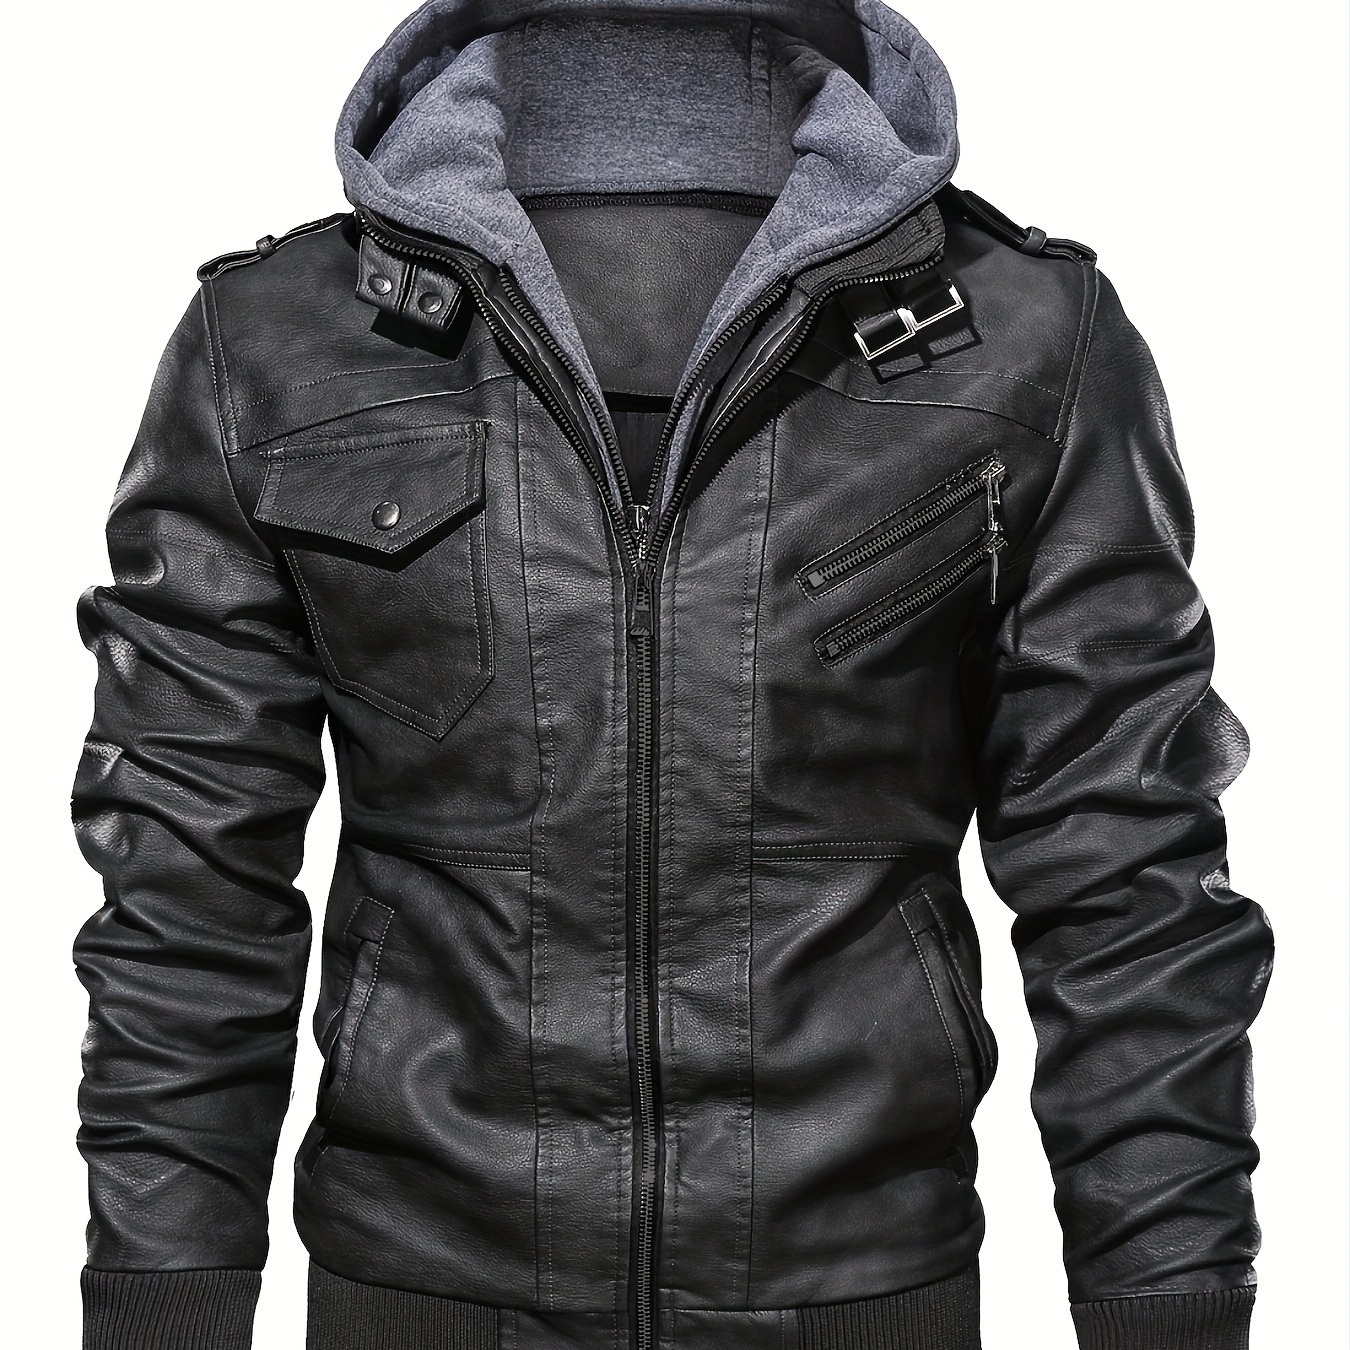 

Men's Pu Leather Hooded Pockets Zipper Long Sleeves Jackets